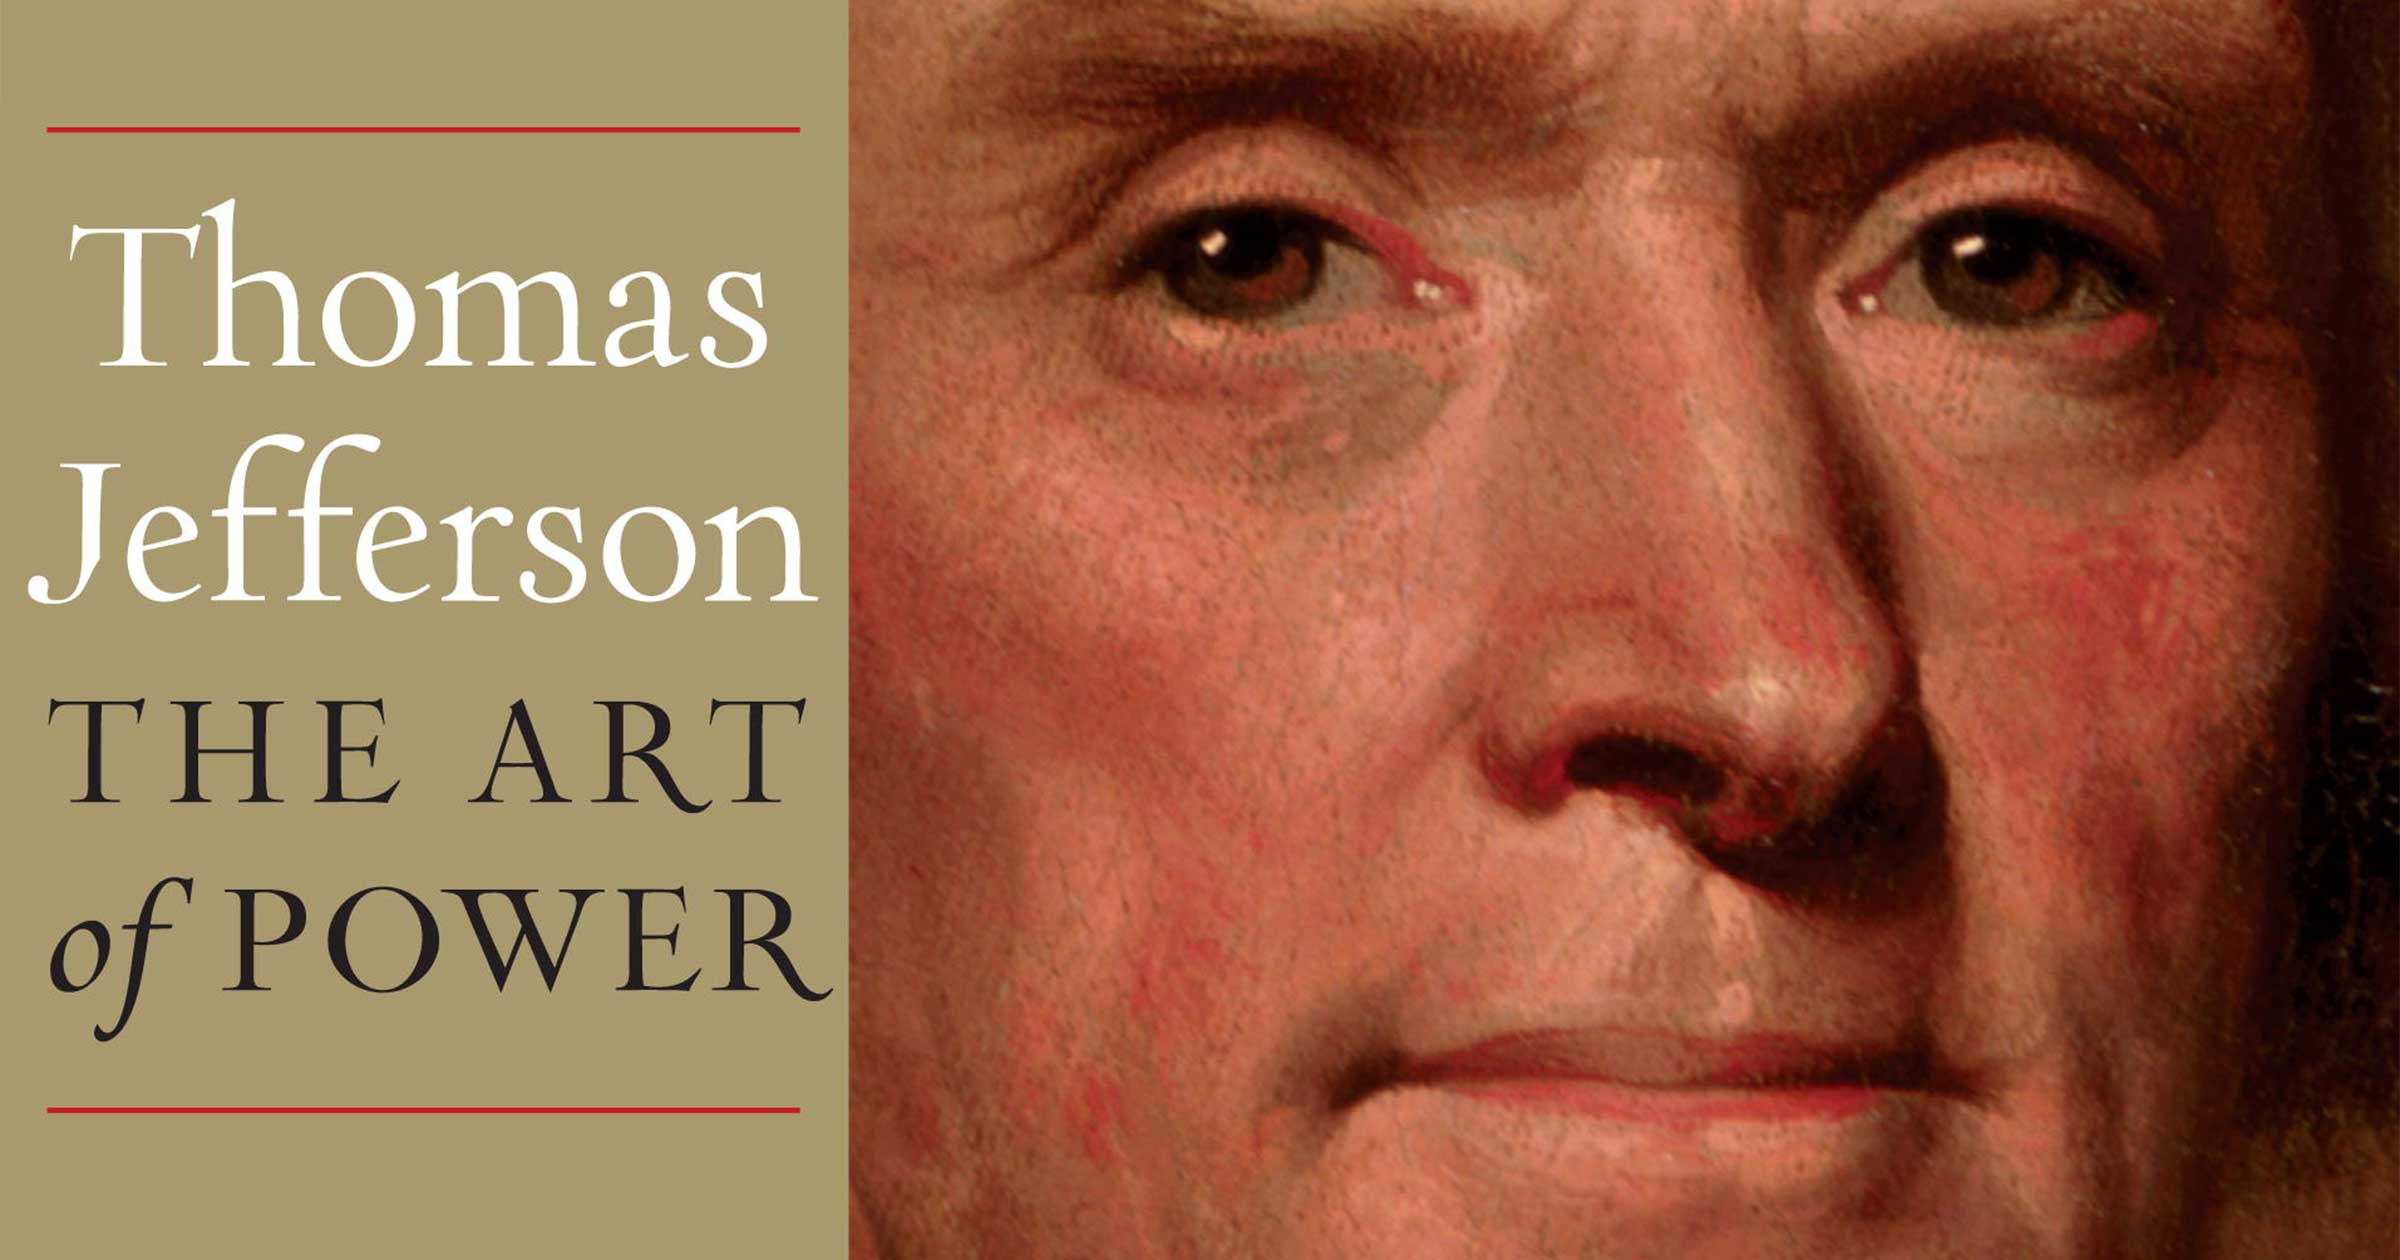 Thomas Jefferson: The Art of Power by Jon Meacham